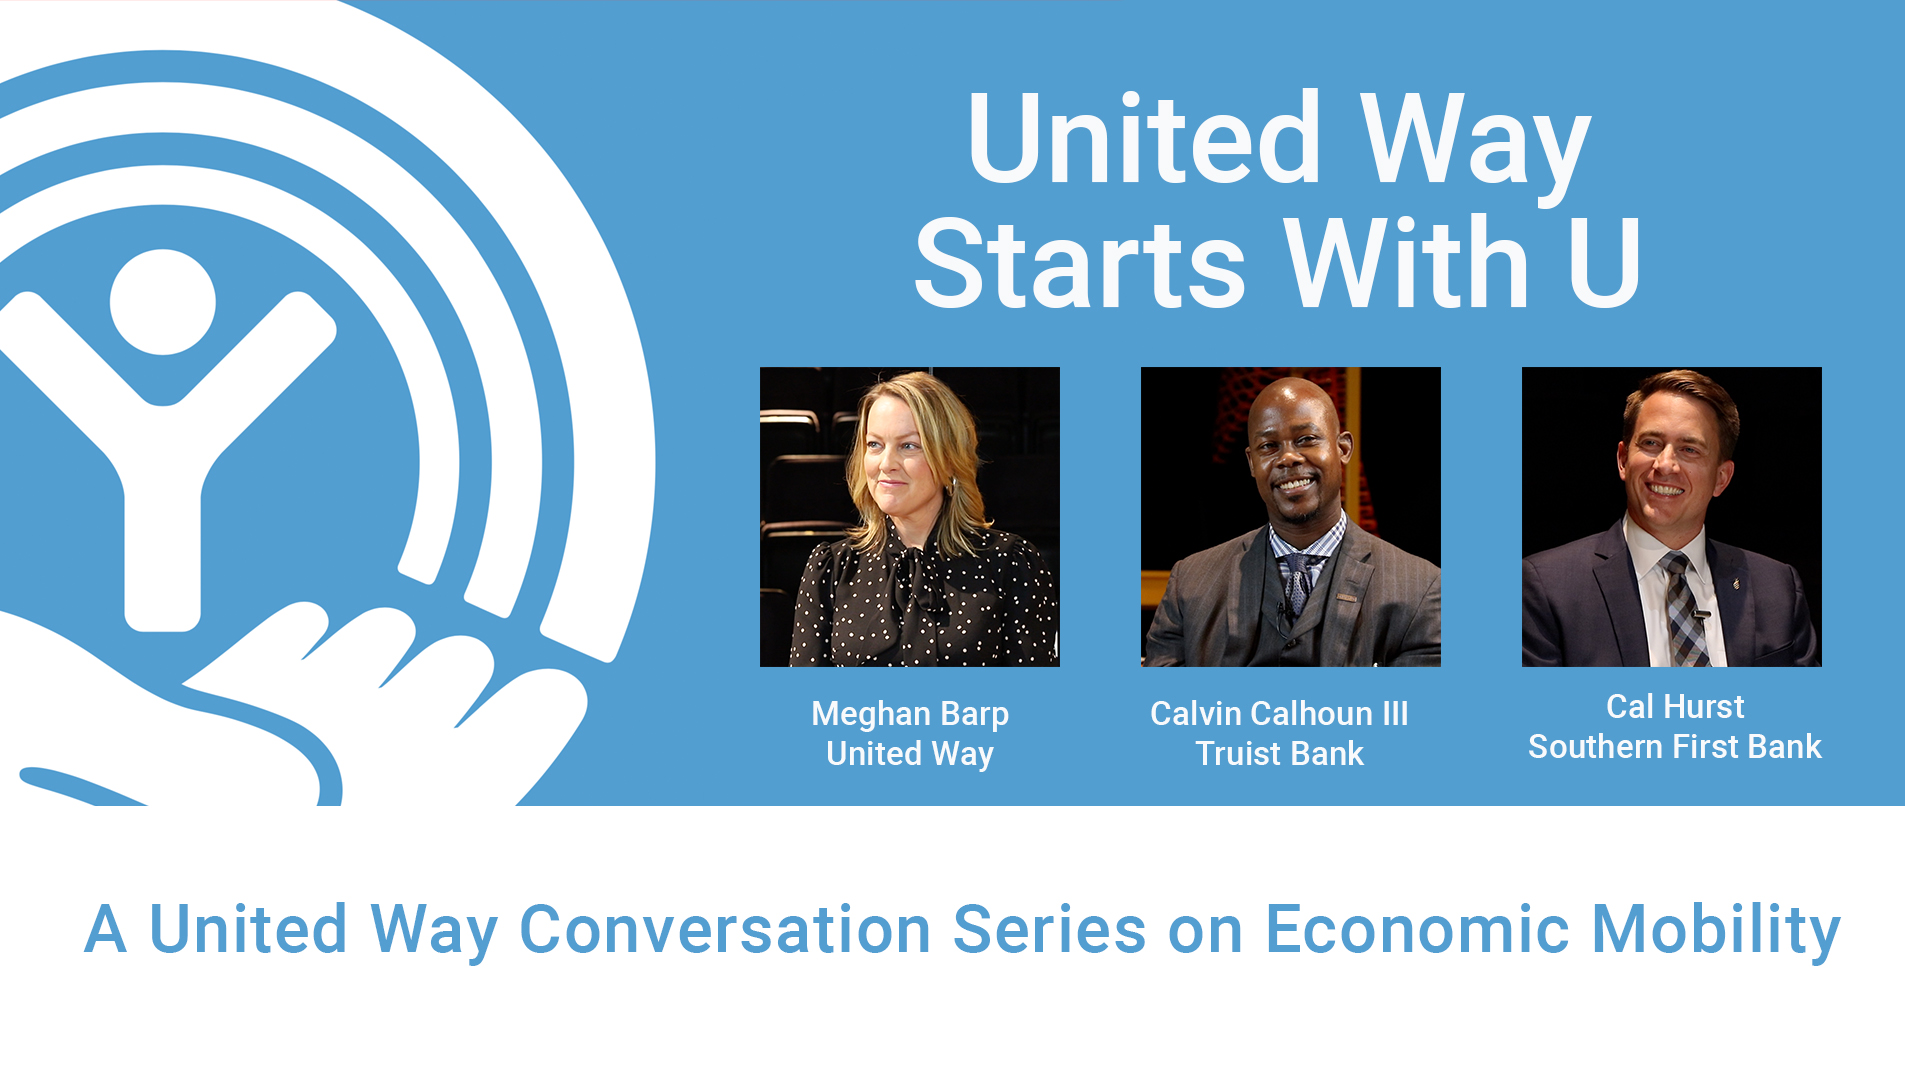 United Way Conversation Series: United Way Starts With U